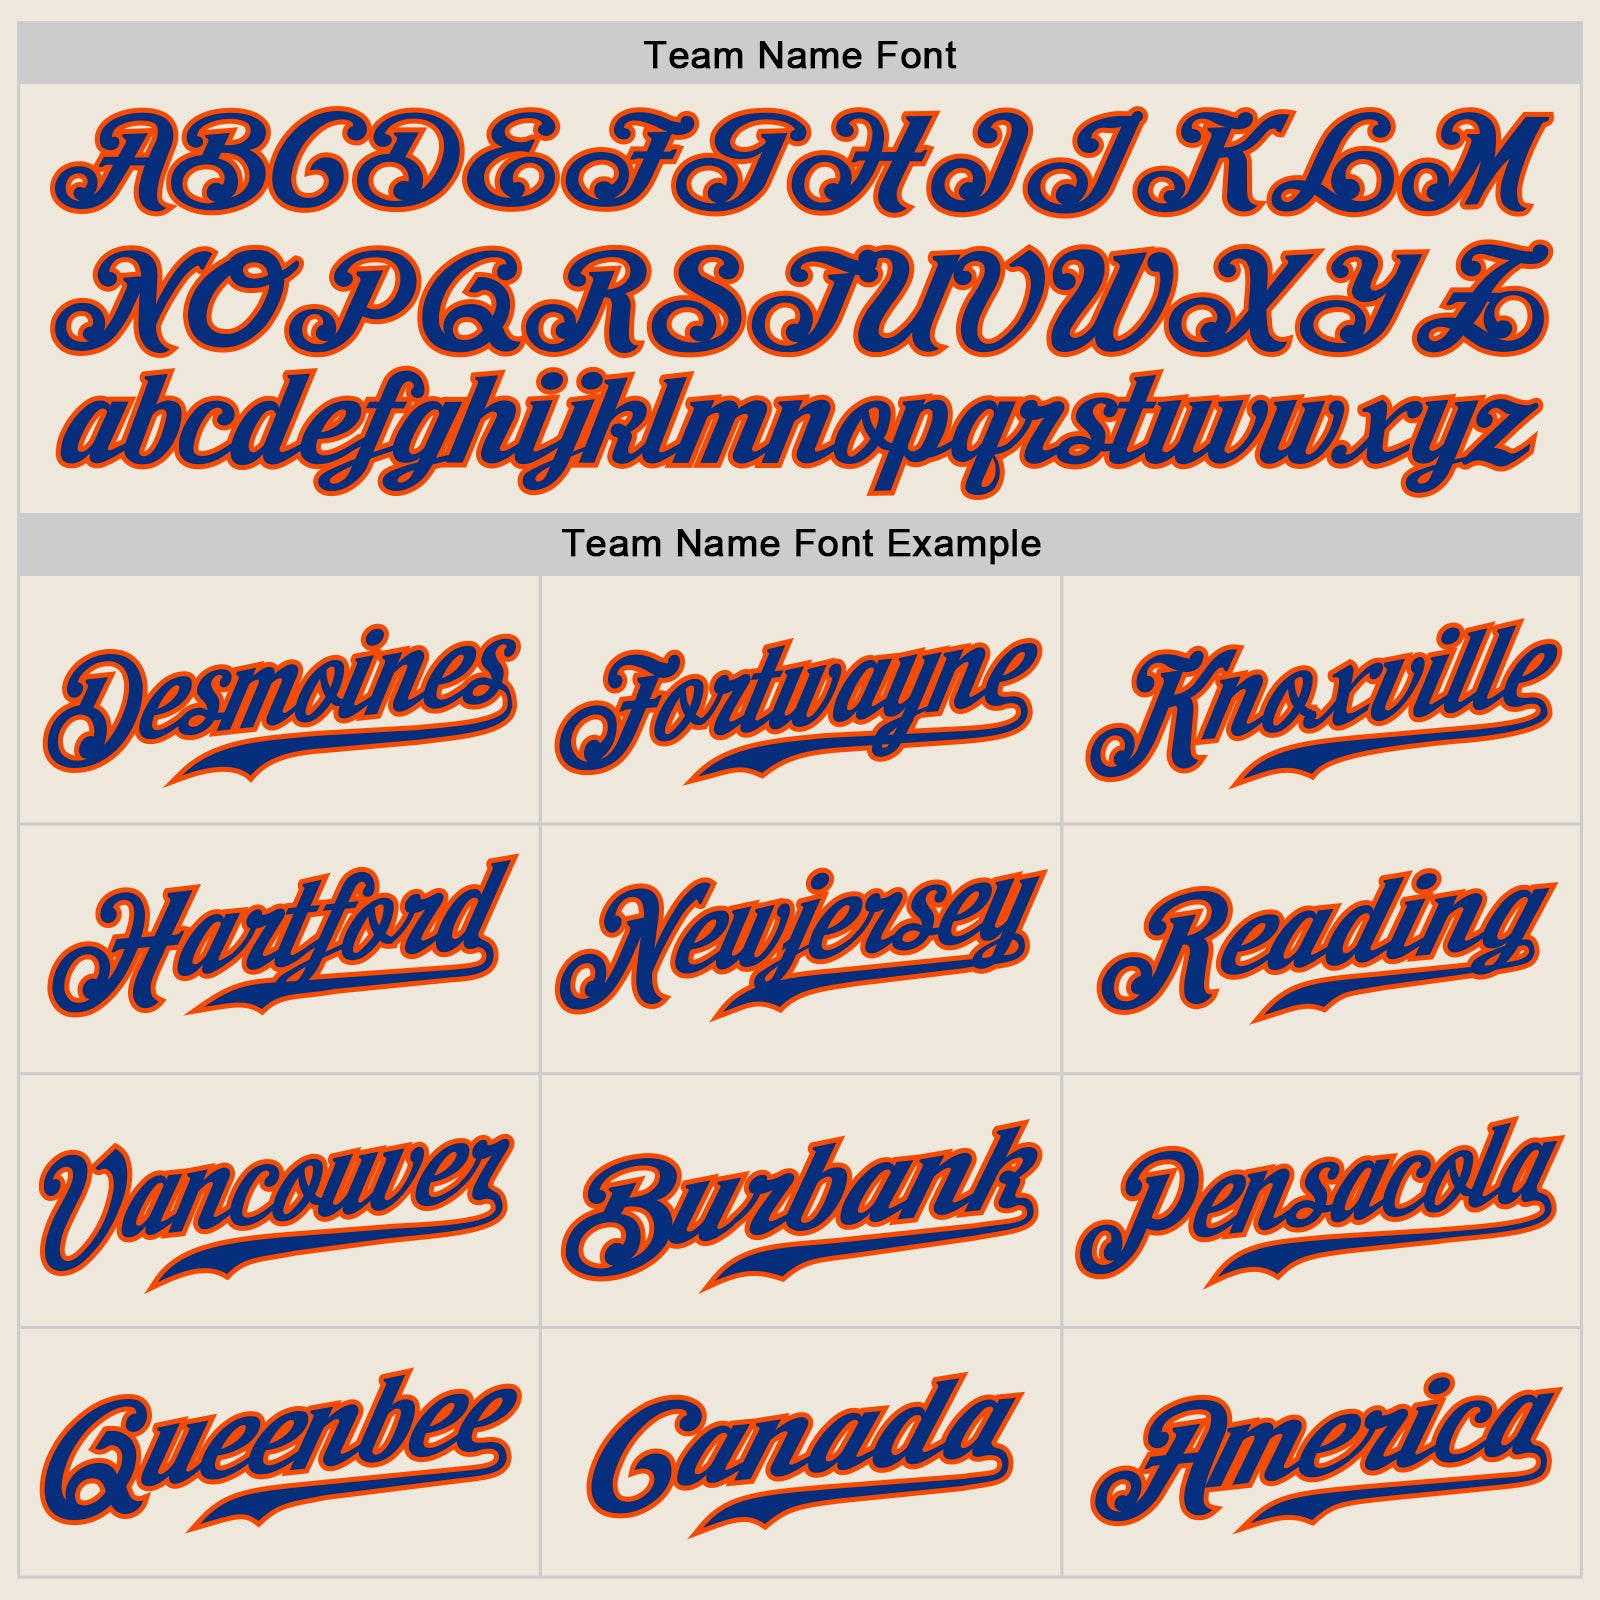 Custom Cream Royal Pinstripe Royal-Orange Authentic Baseball Jersey